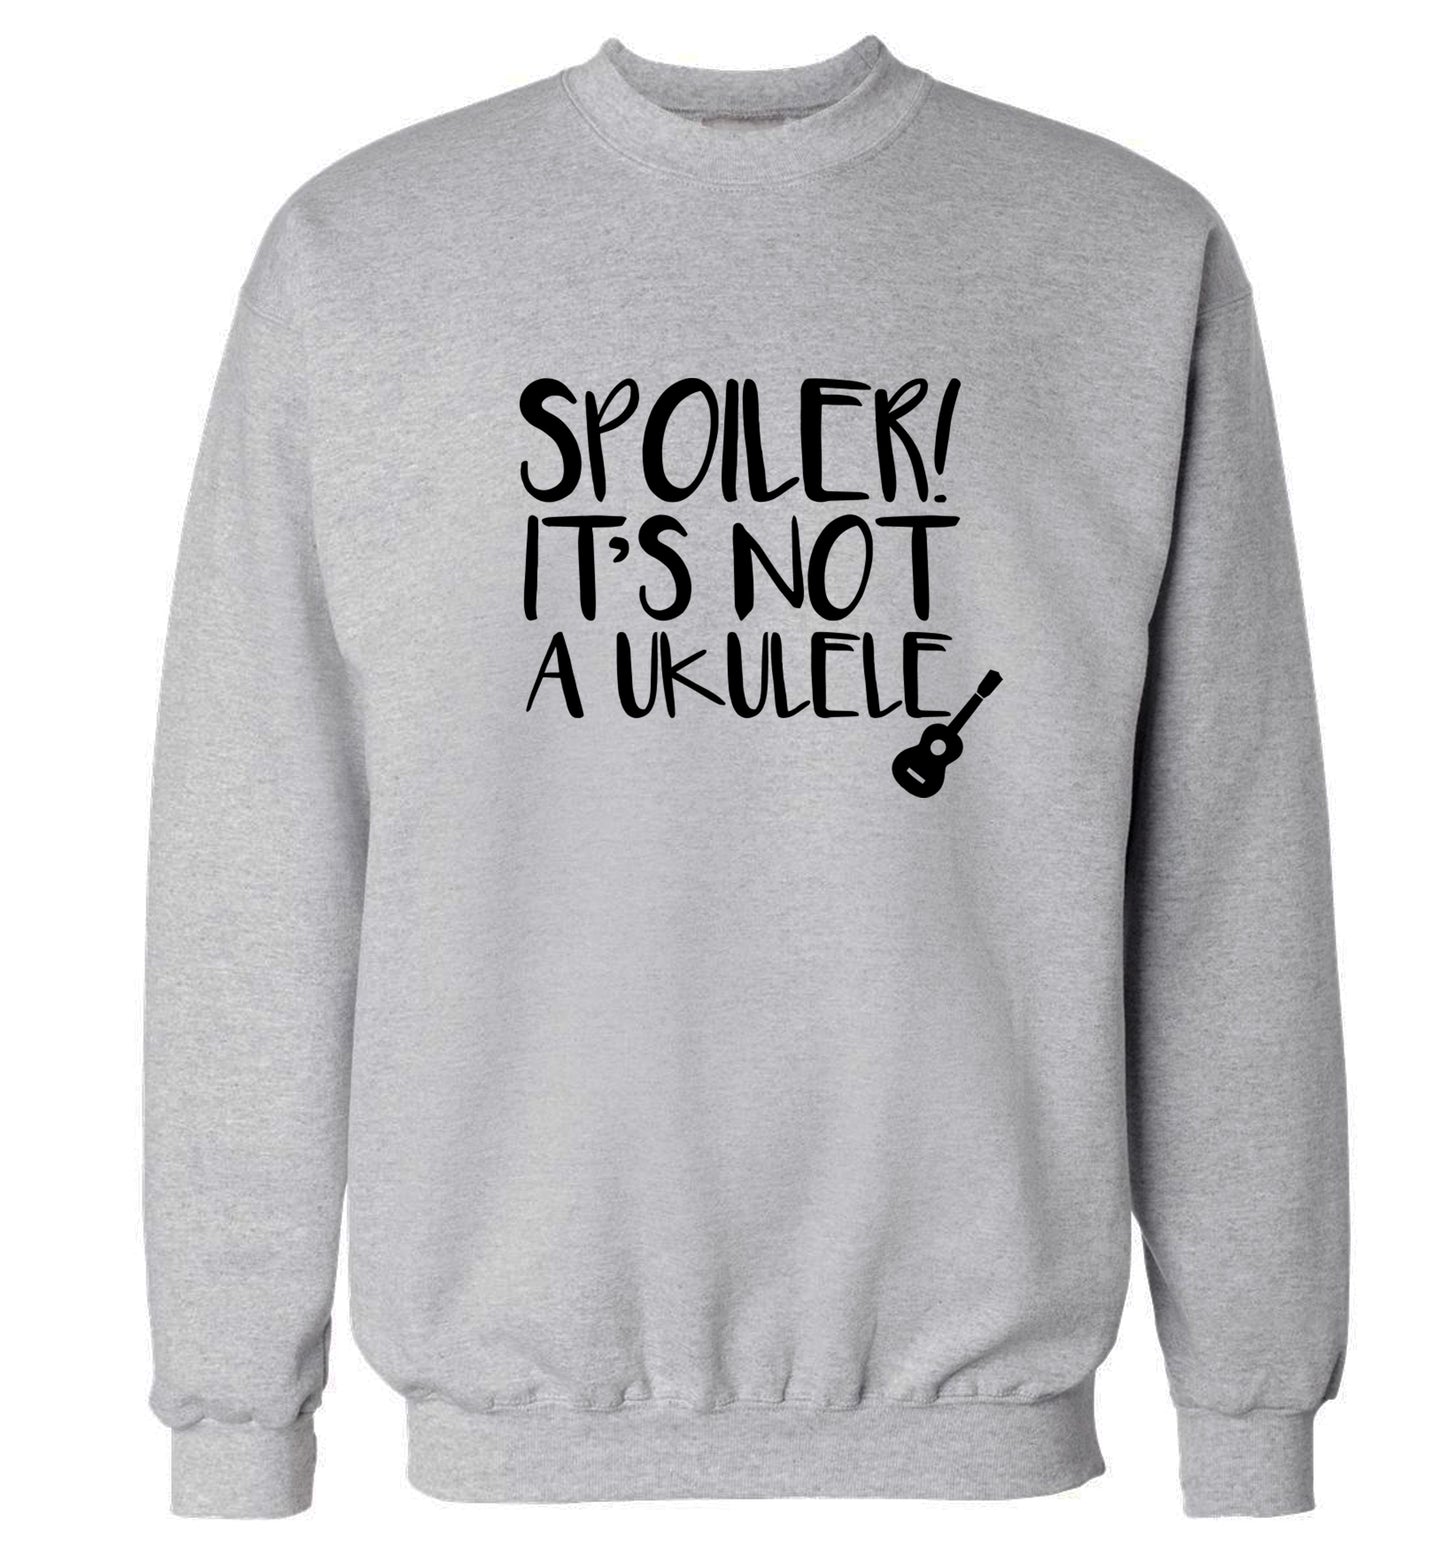 Spoiler it's not a ukulele Adult's unisex grey Sweater 2XL